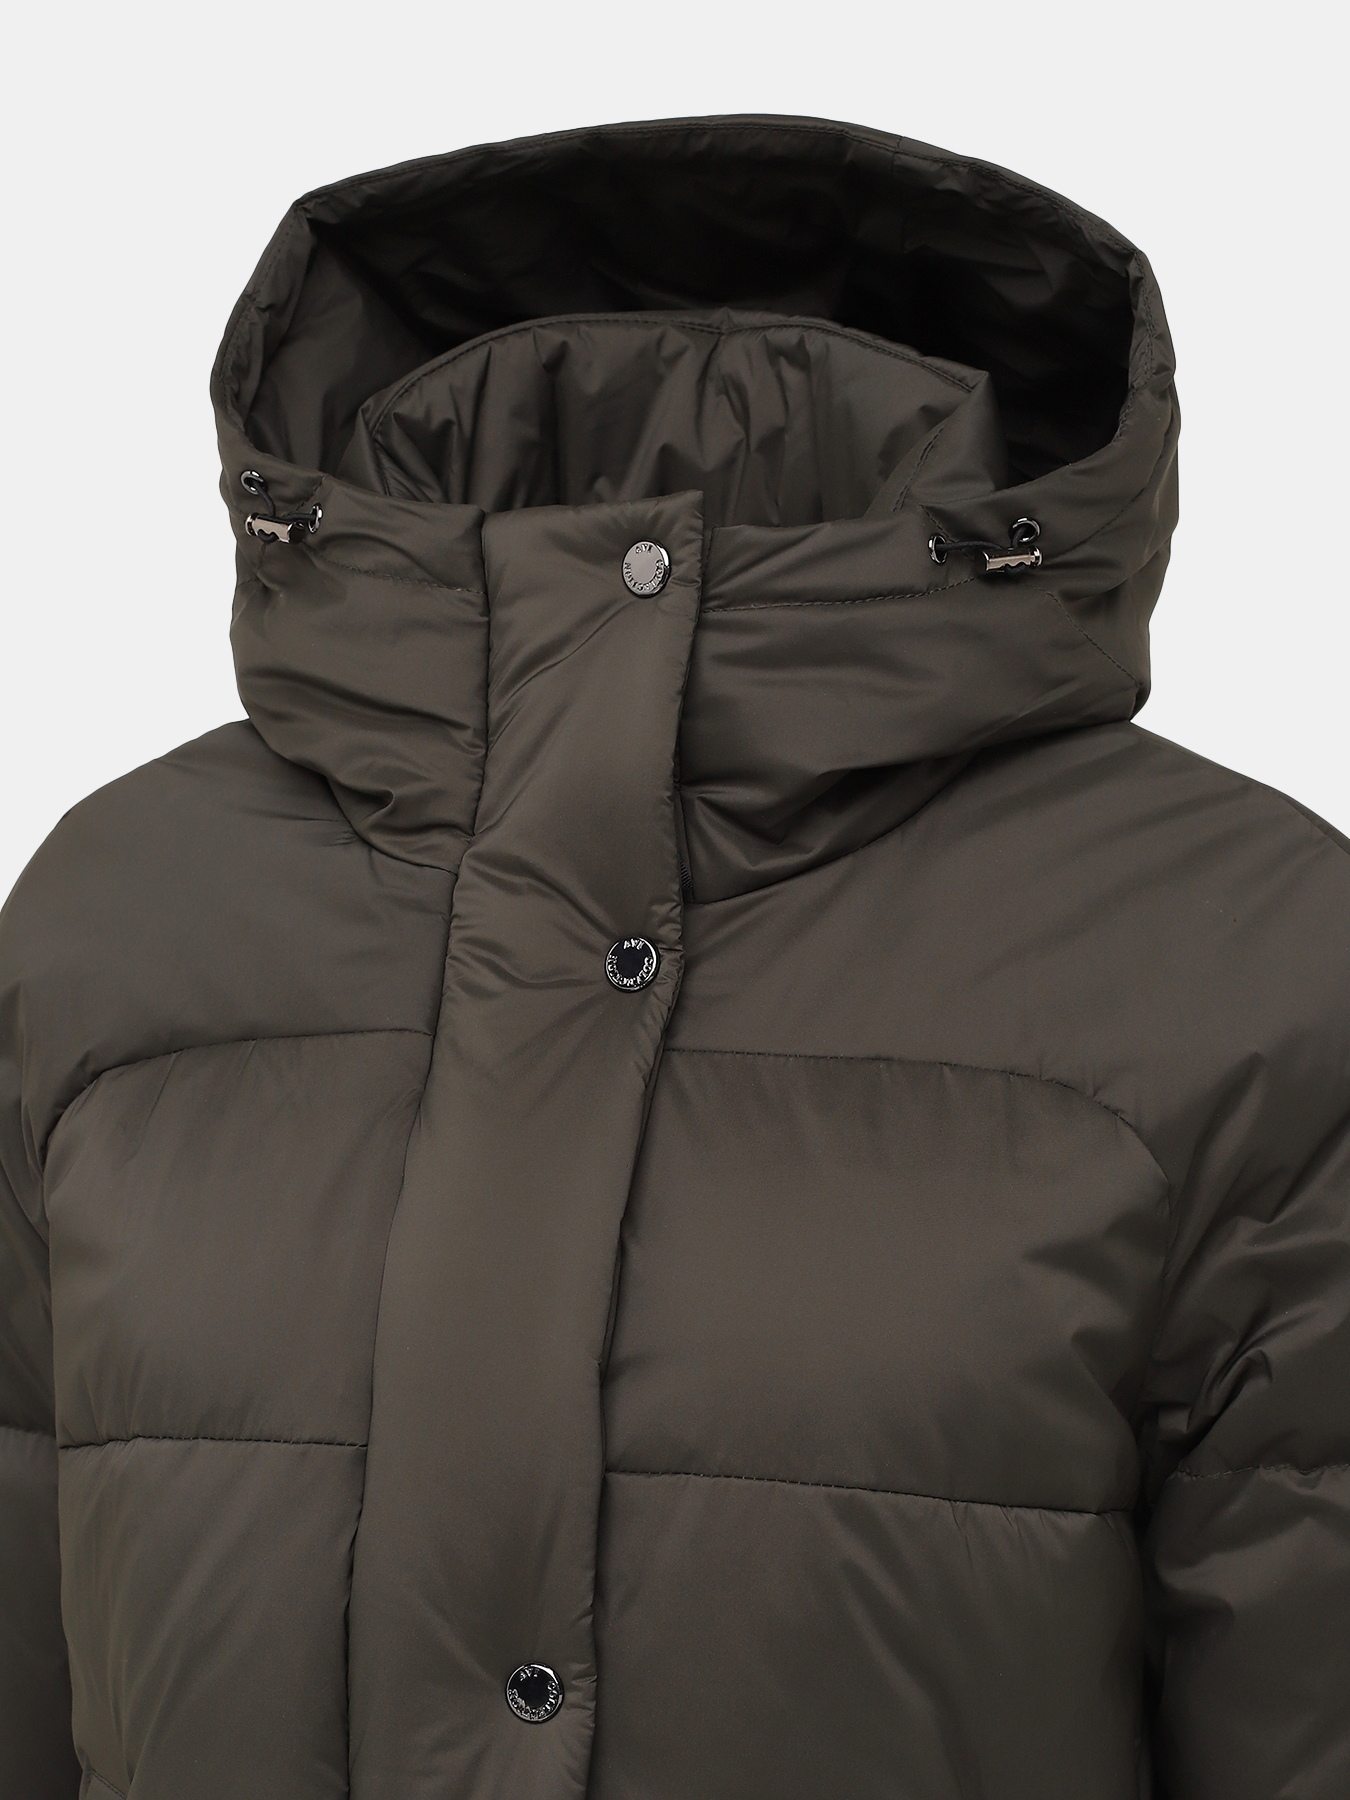 Пальто зимнее AVI 433638-021, цвет хаки, размер 46 - фото 2